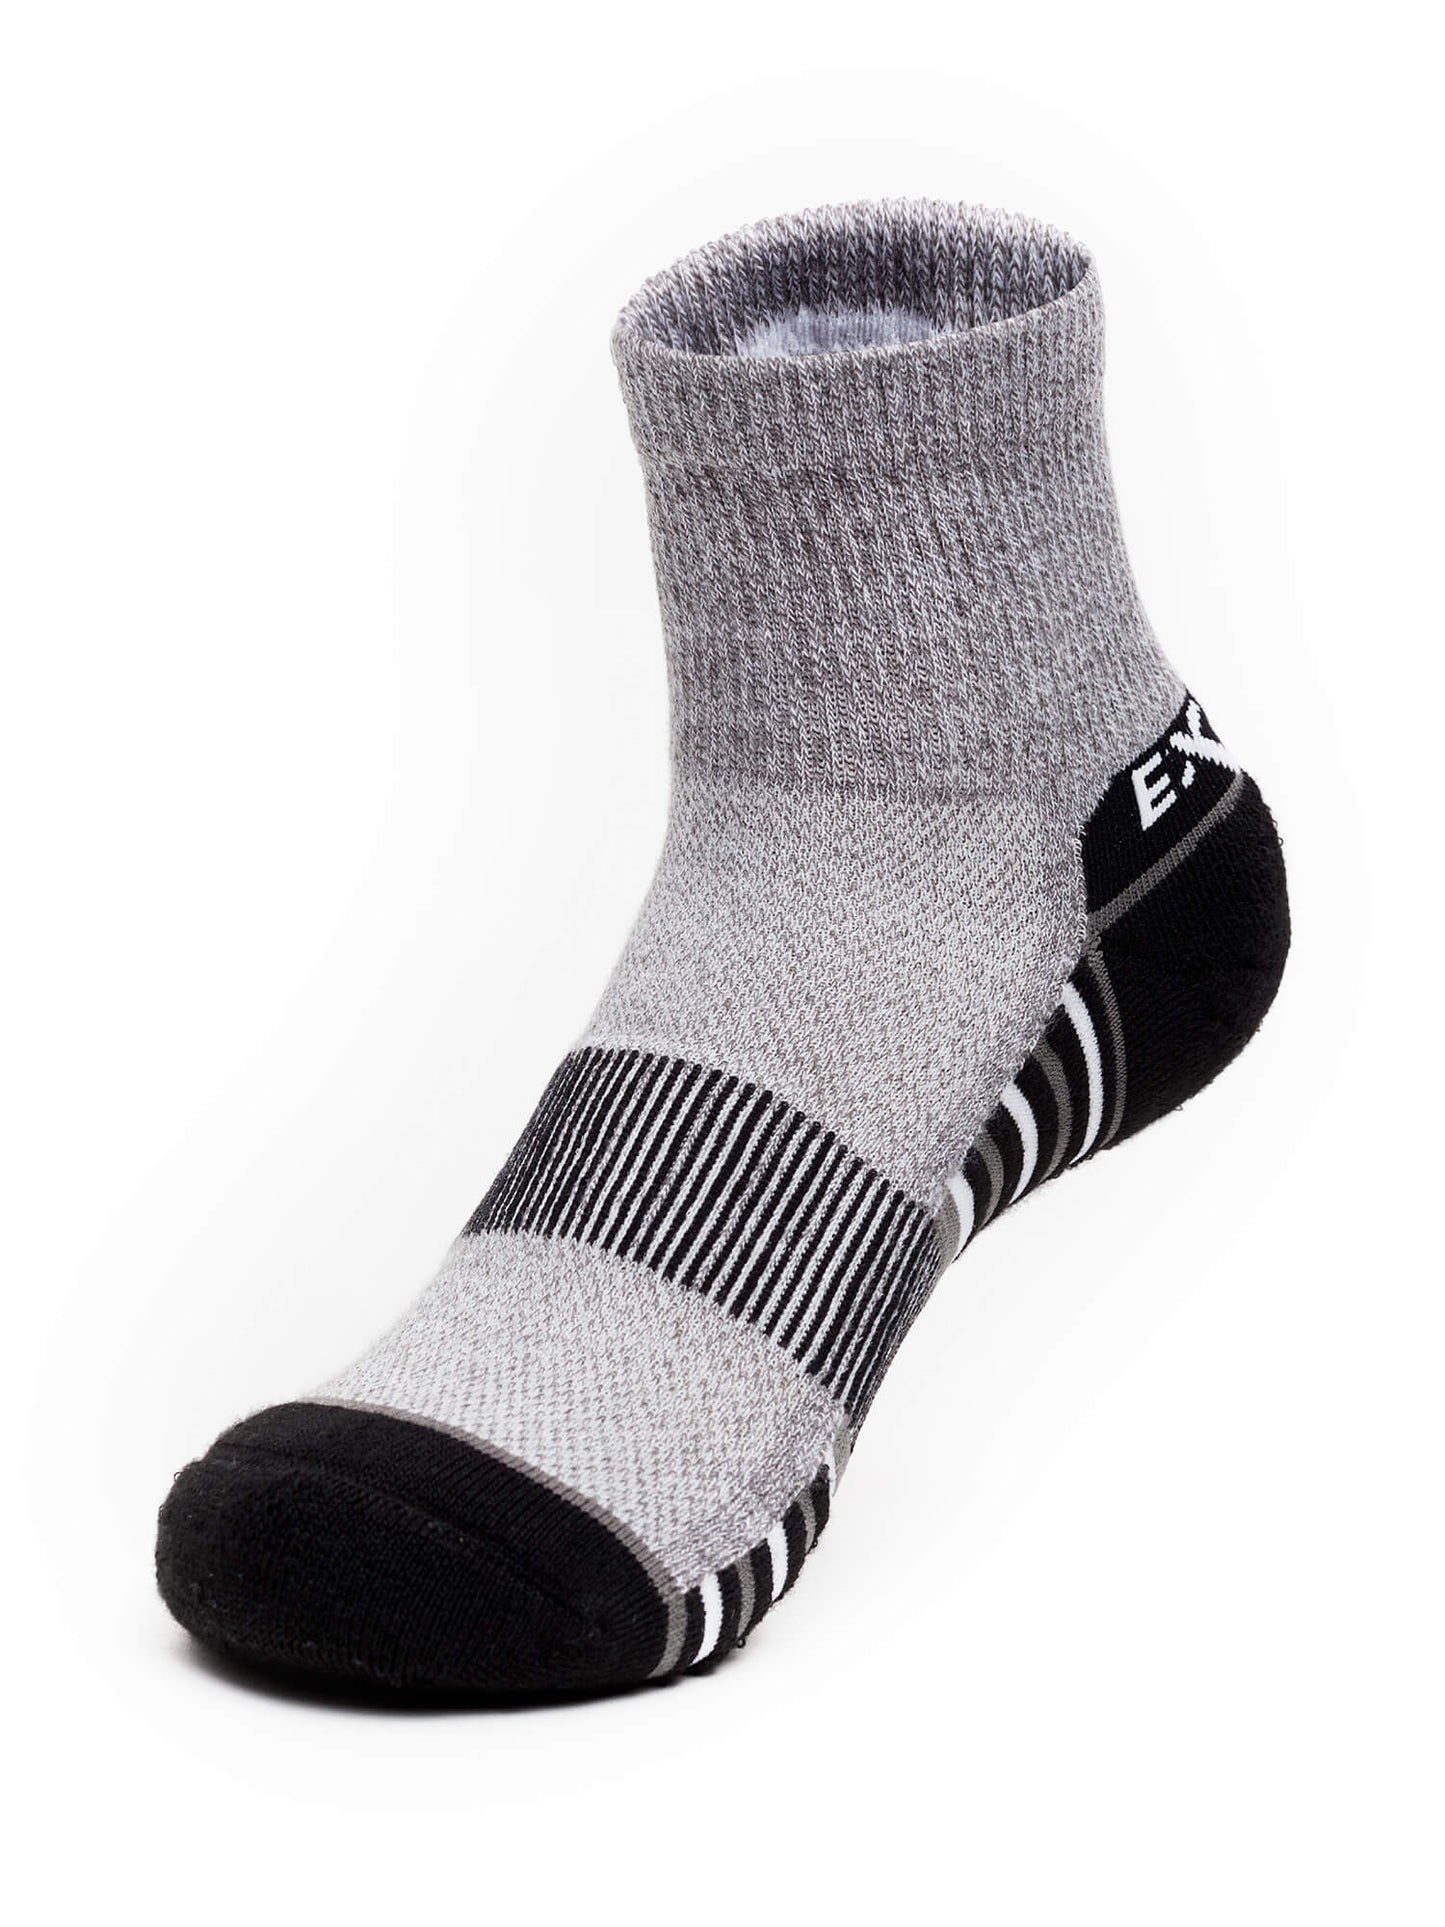 Front side of Thorlos Experia Repreve Ankle Socks in Black